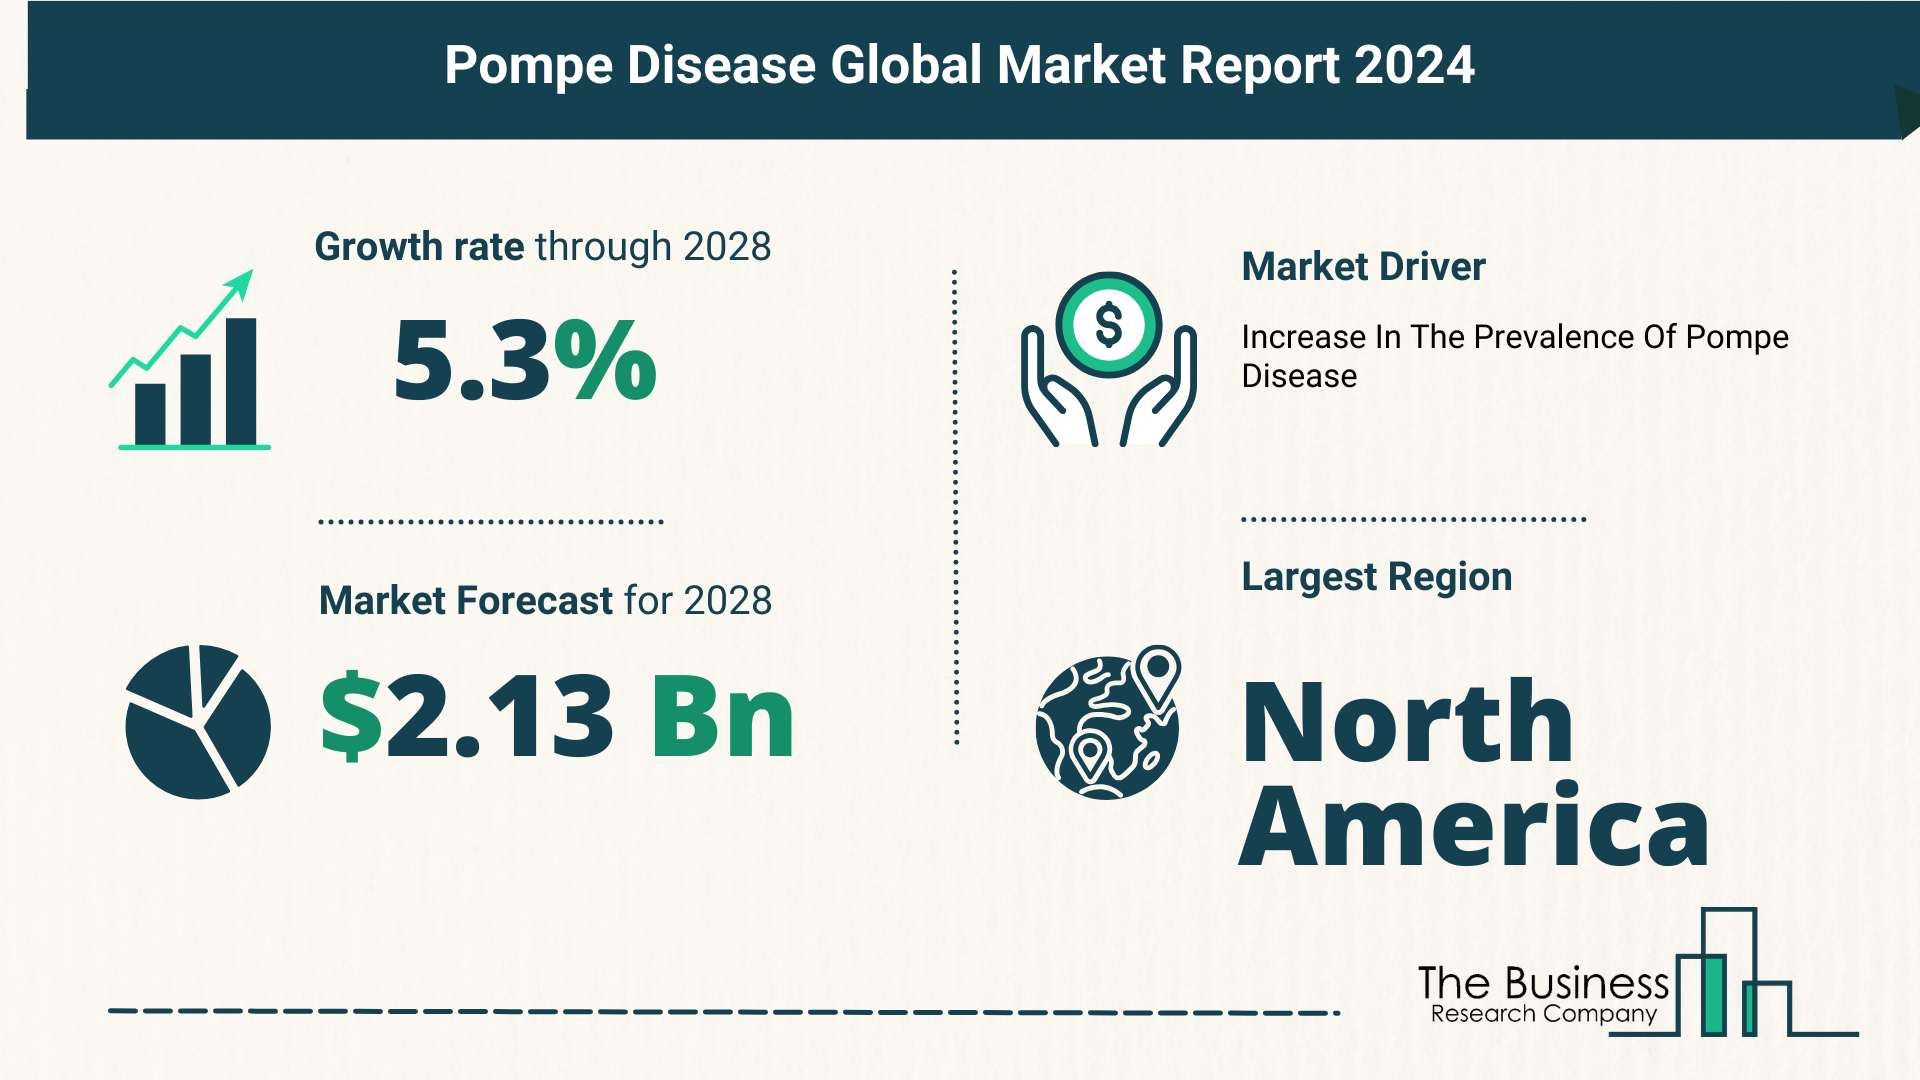 Global Pompe Disease Market